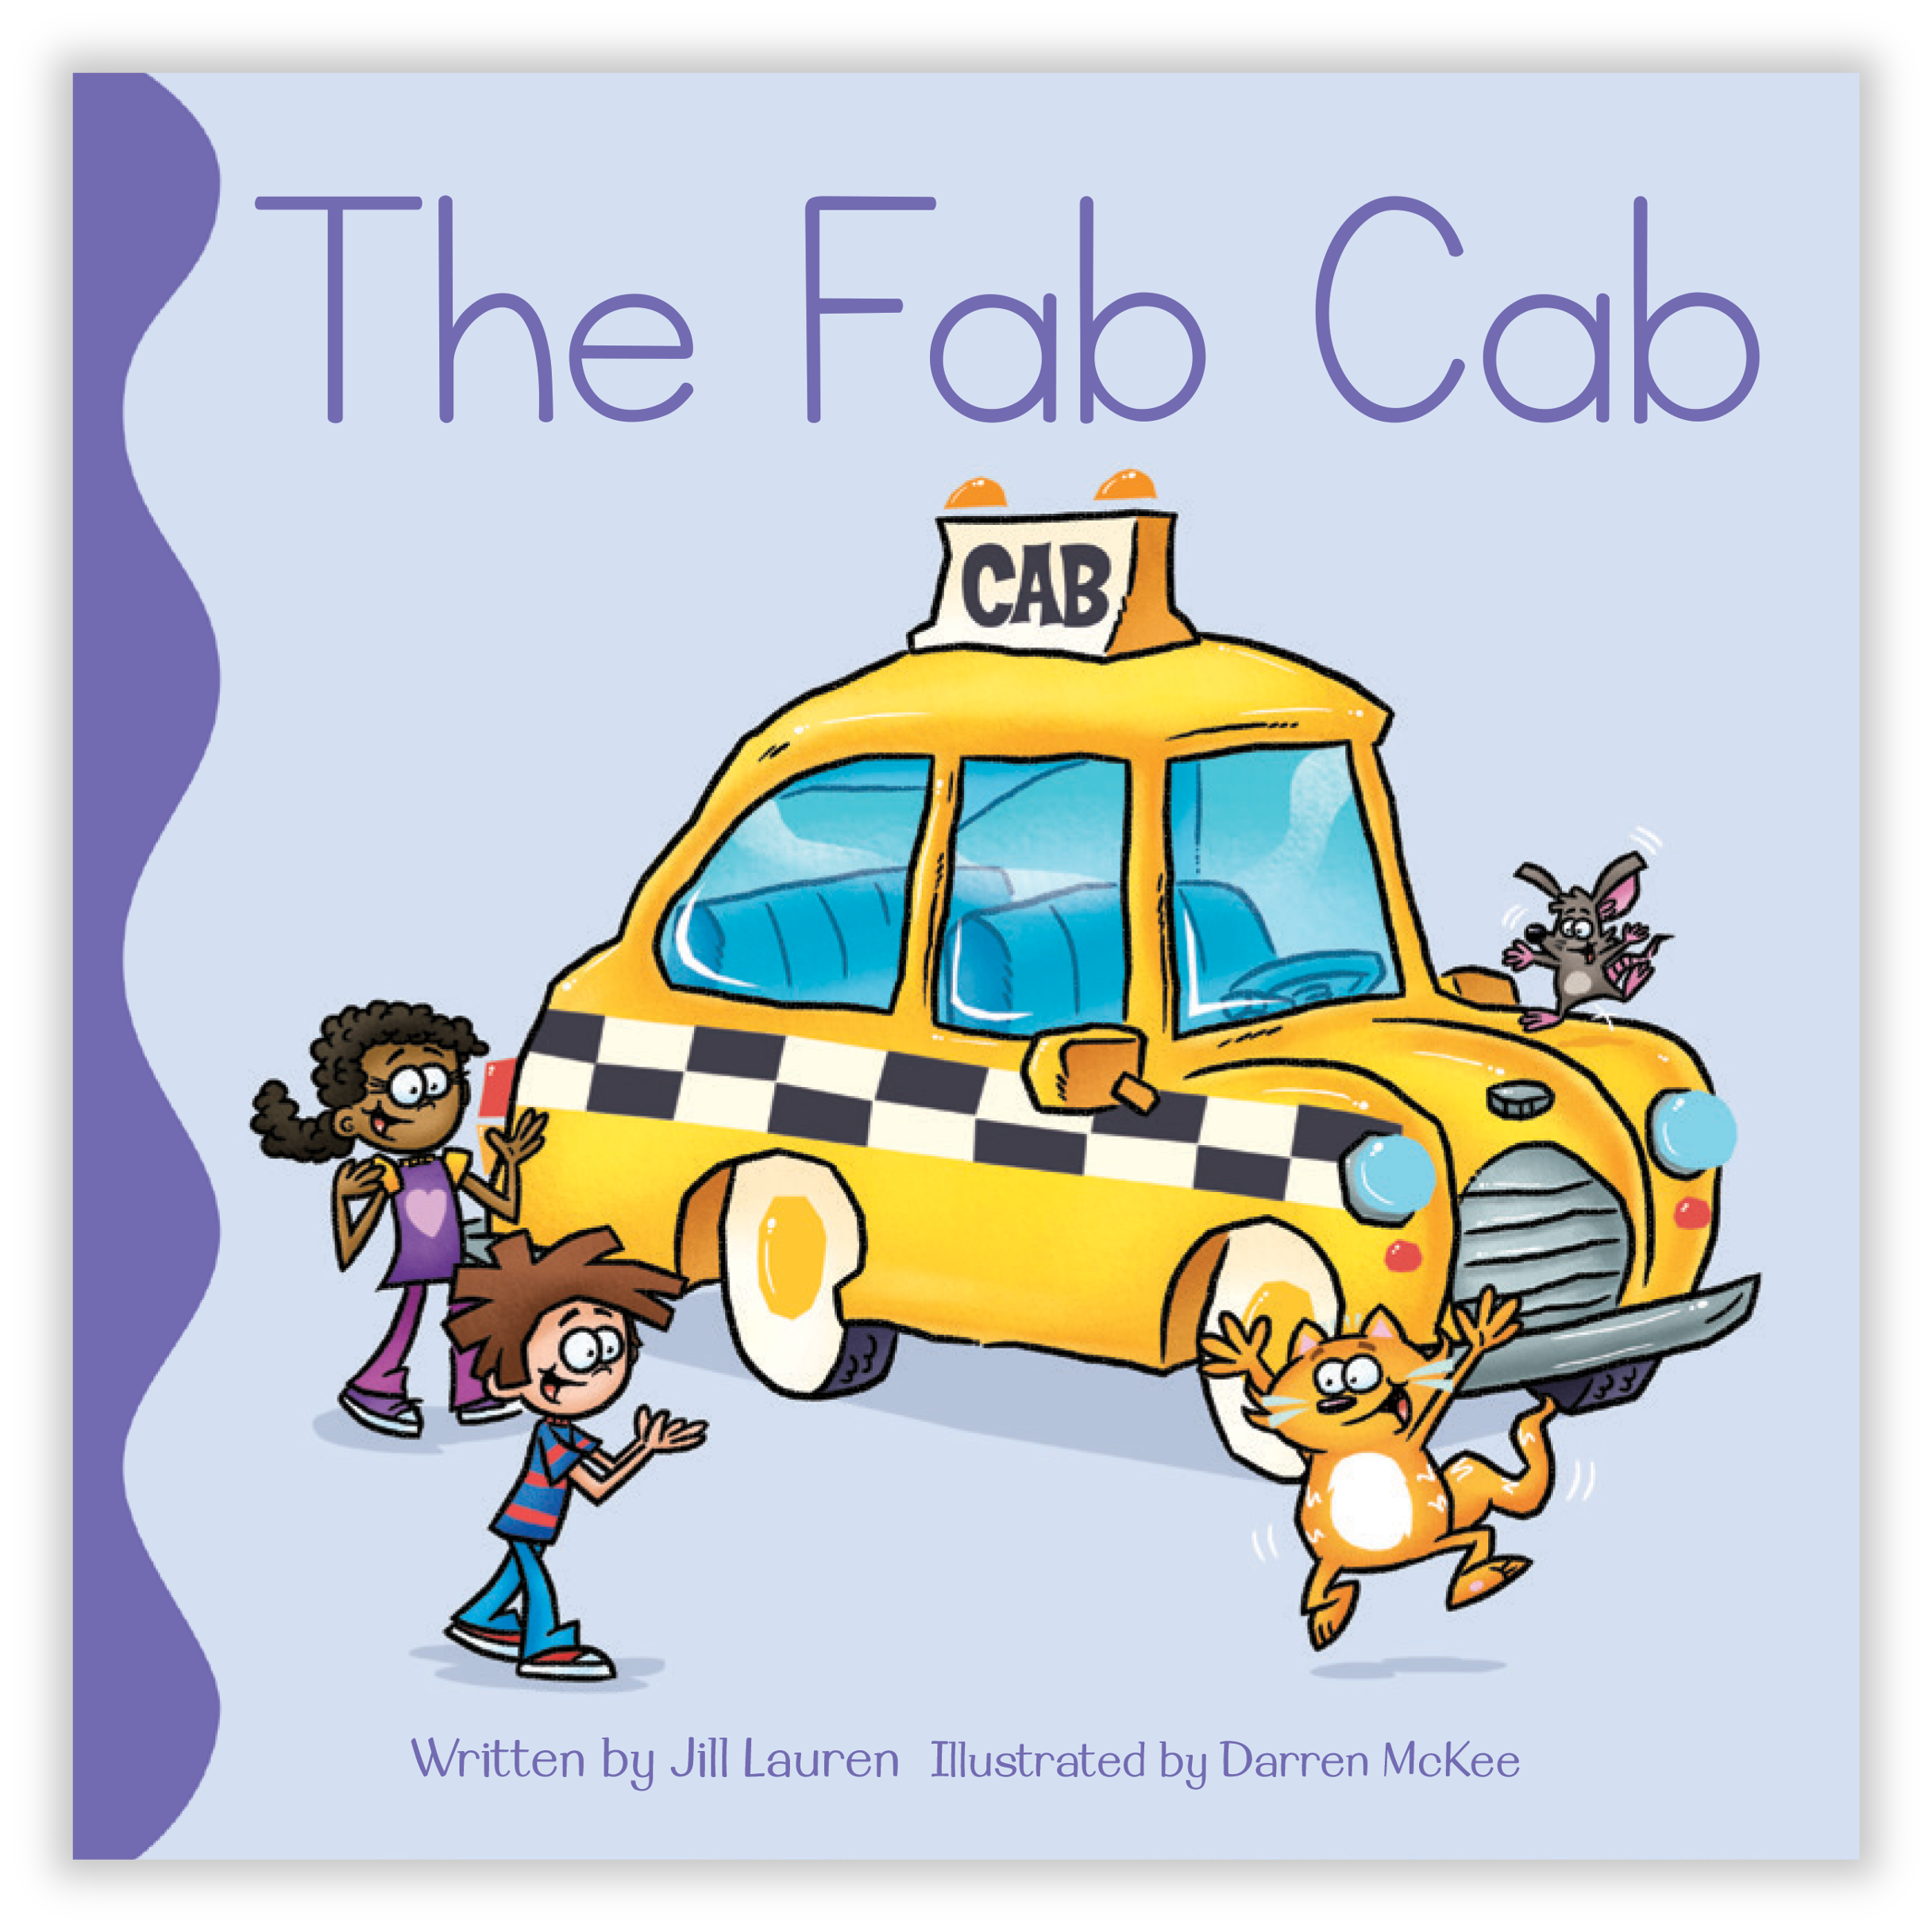 The Fab Cab